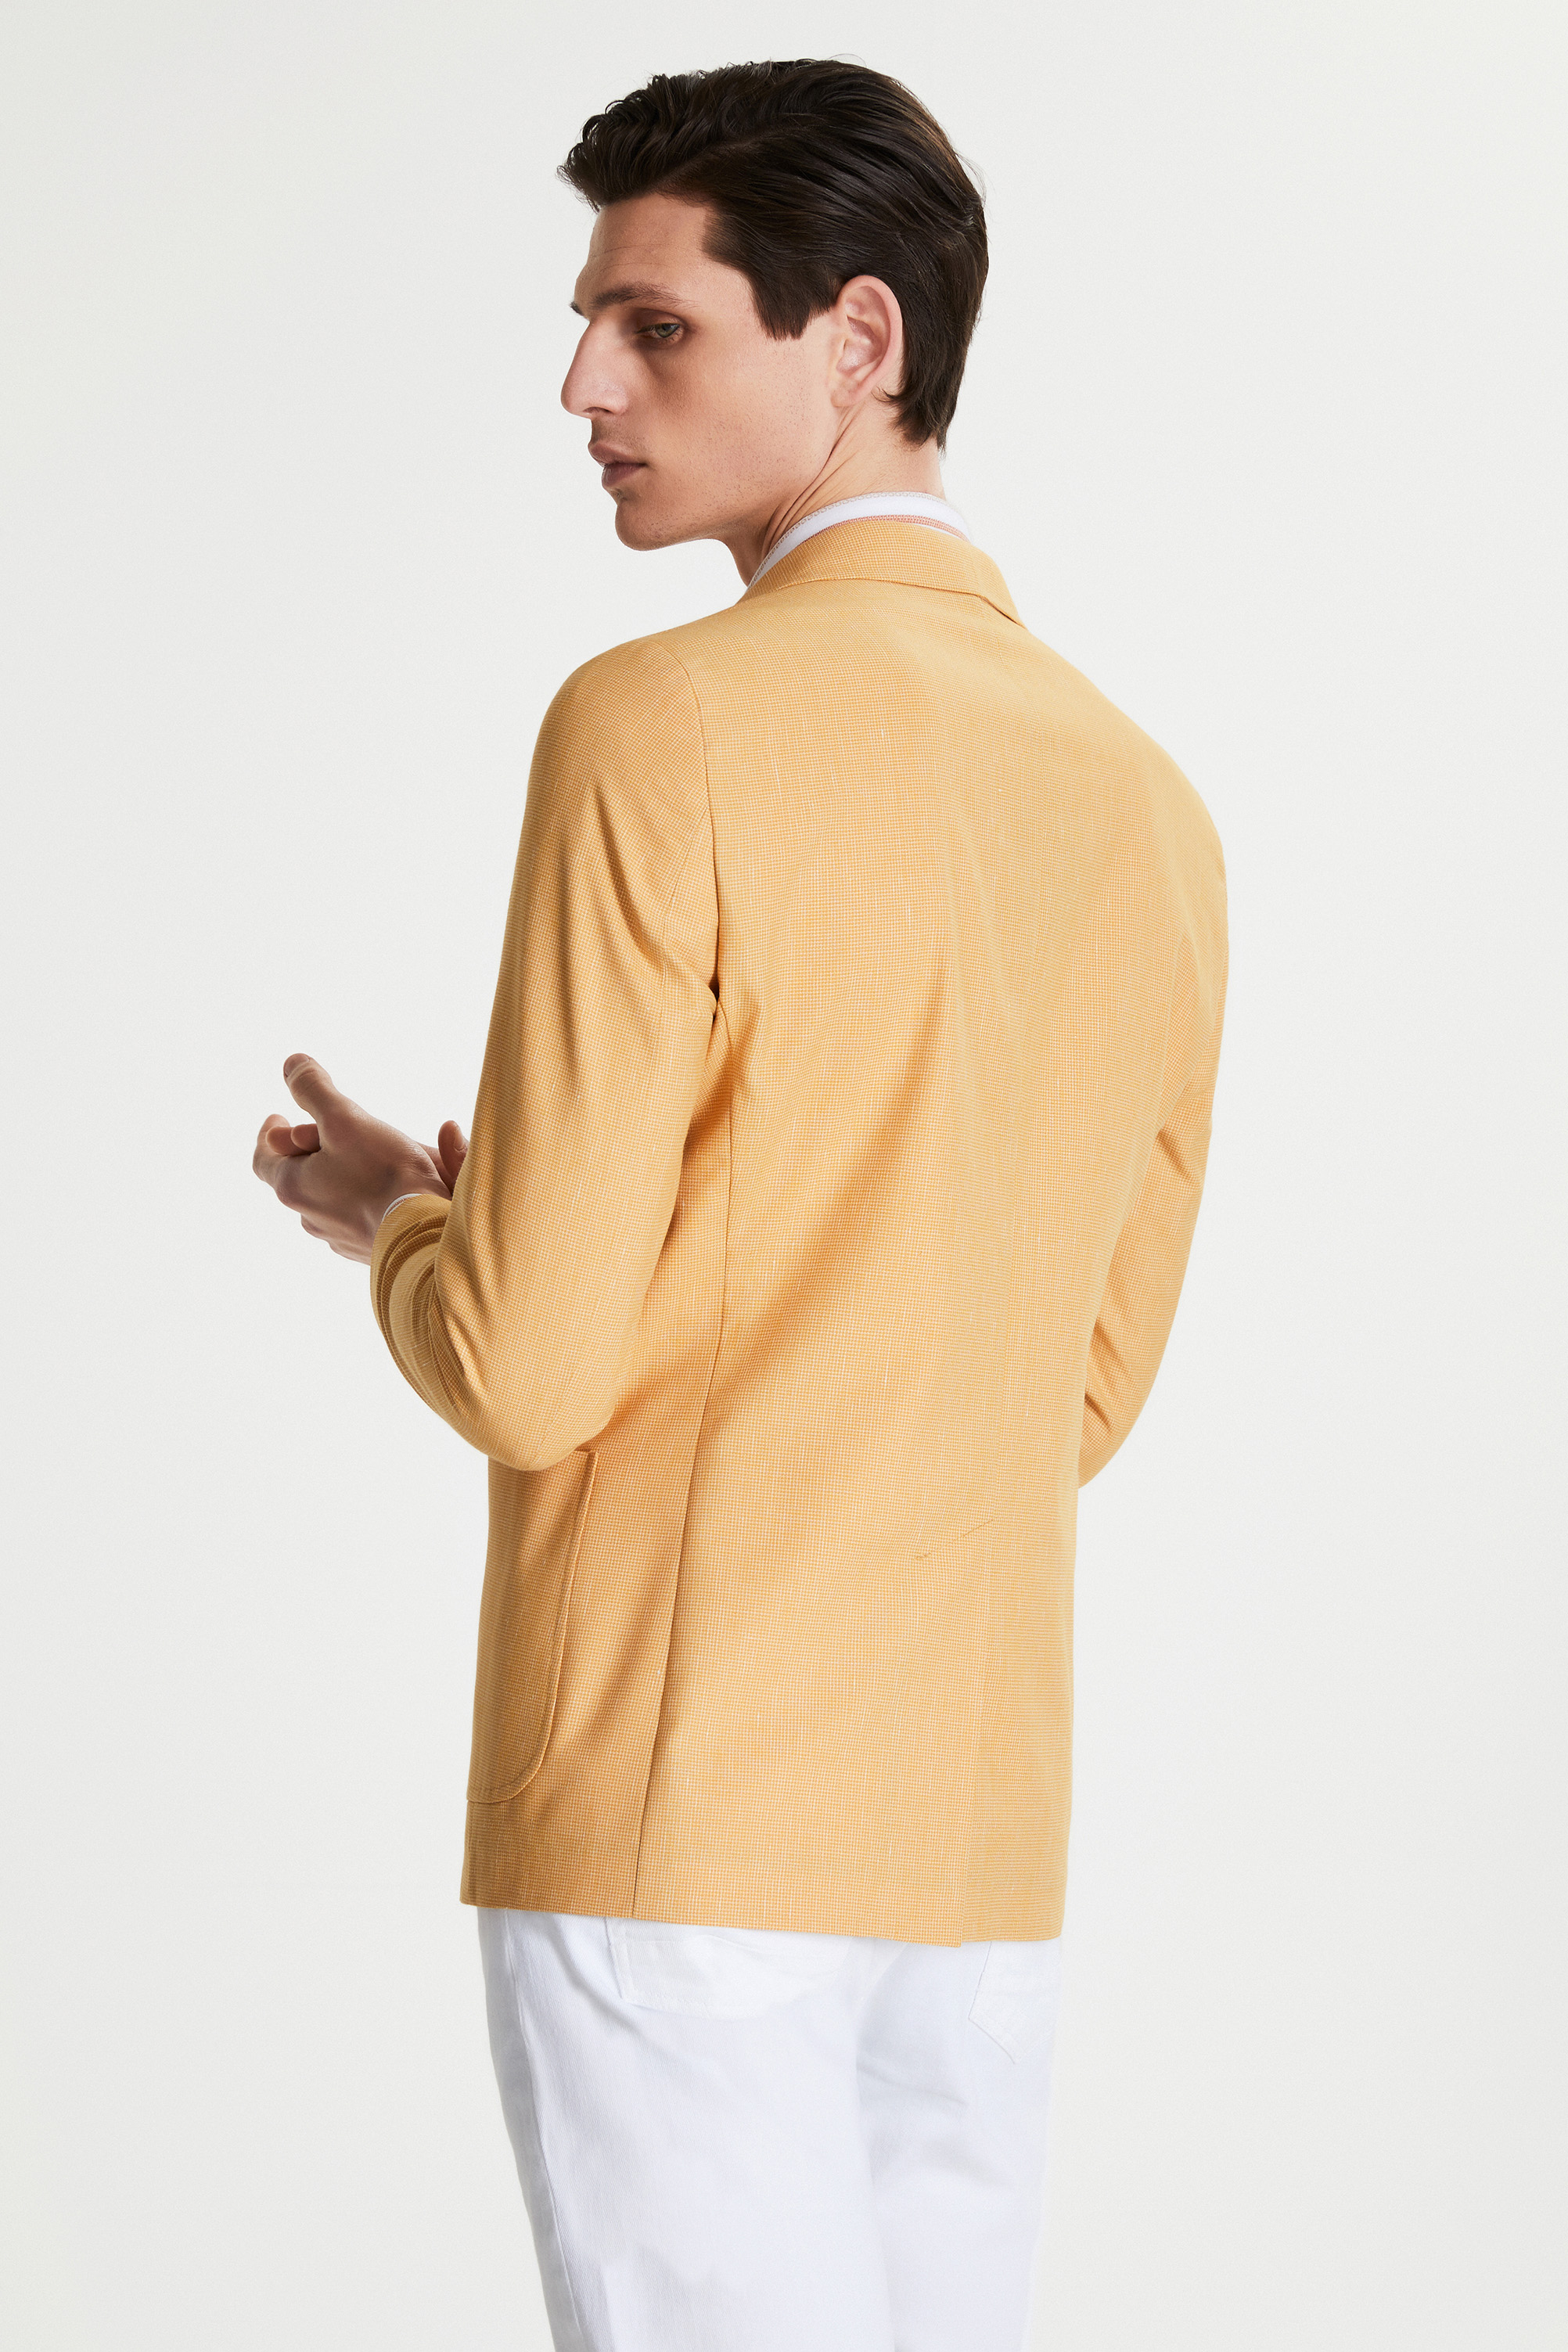 Damat Tween Tween Slim Fit Sarı Desenli Kumaş Ceket. 4